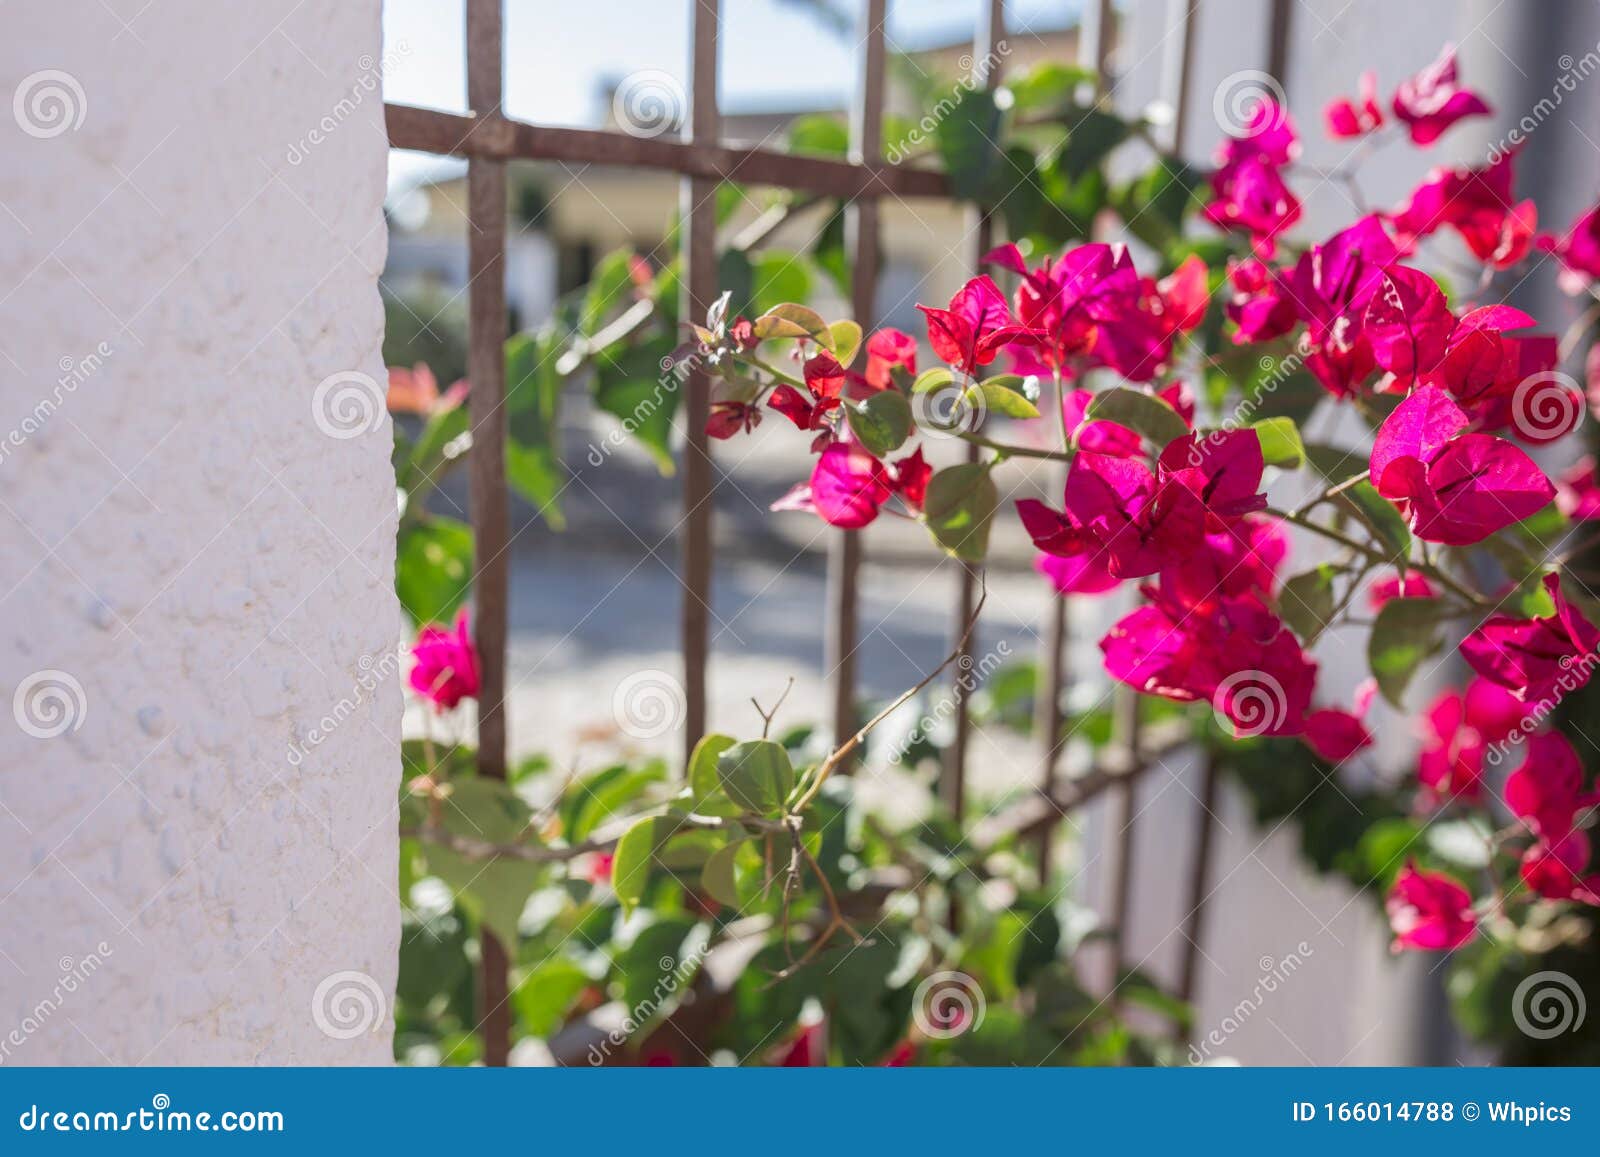 fuente palmera whitewashed walls and windows full of flowers, cordoba, spain